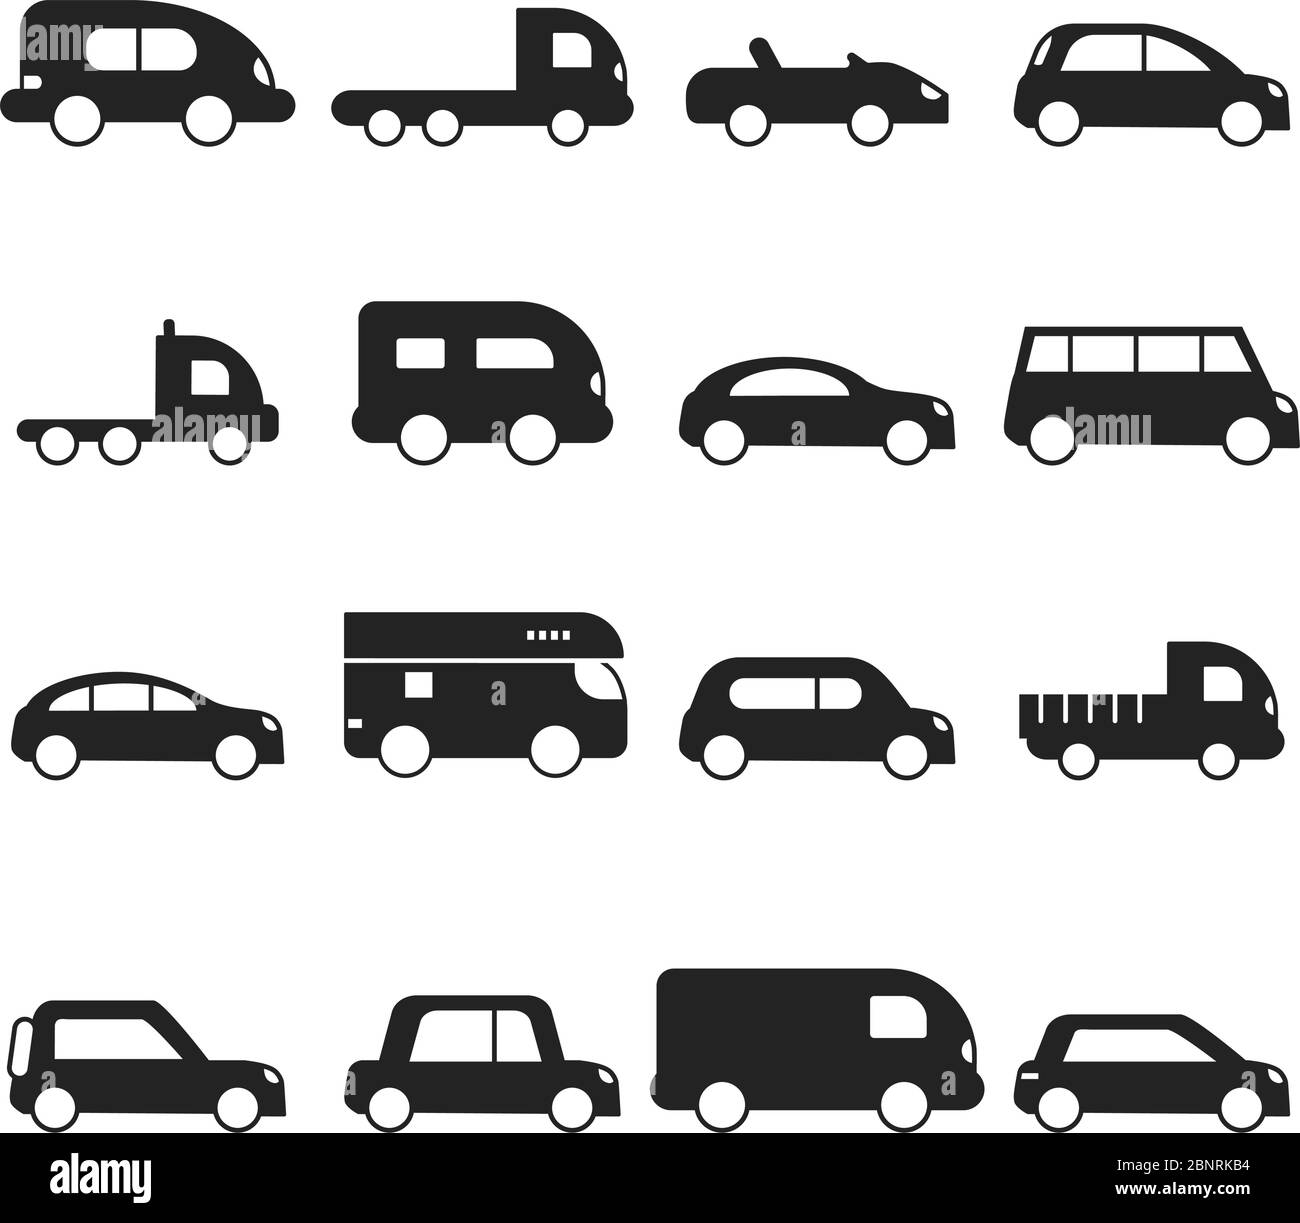 Car silhouettes icon. Type of transport minivan truck suv micro van vector black symbols Stock Vector